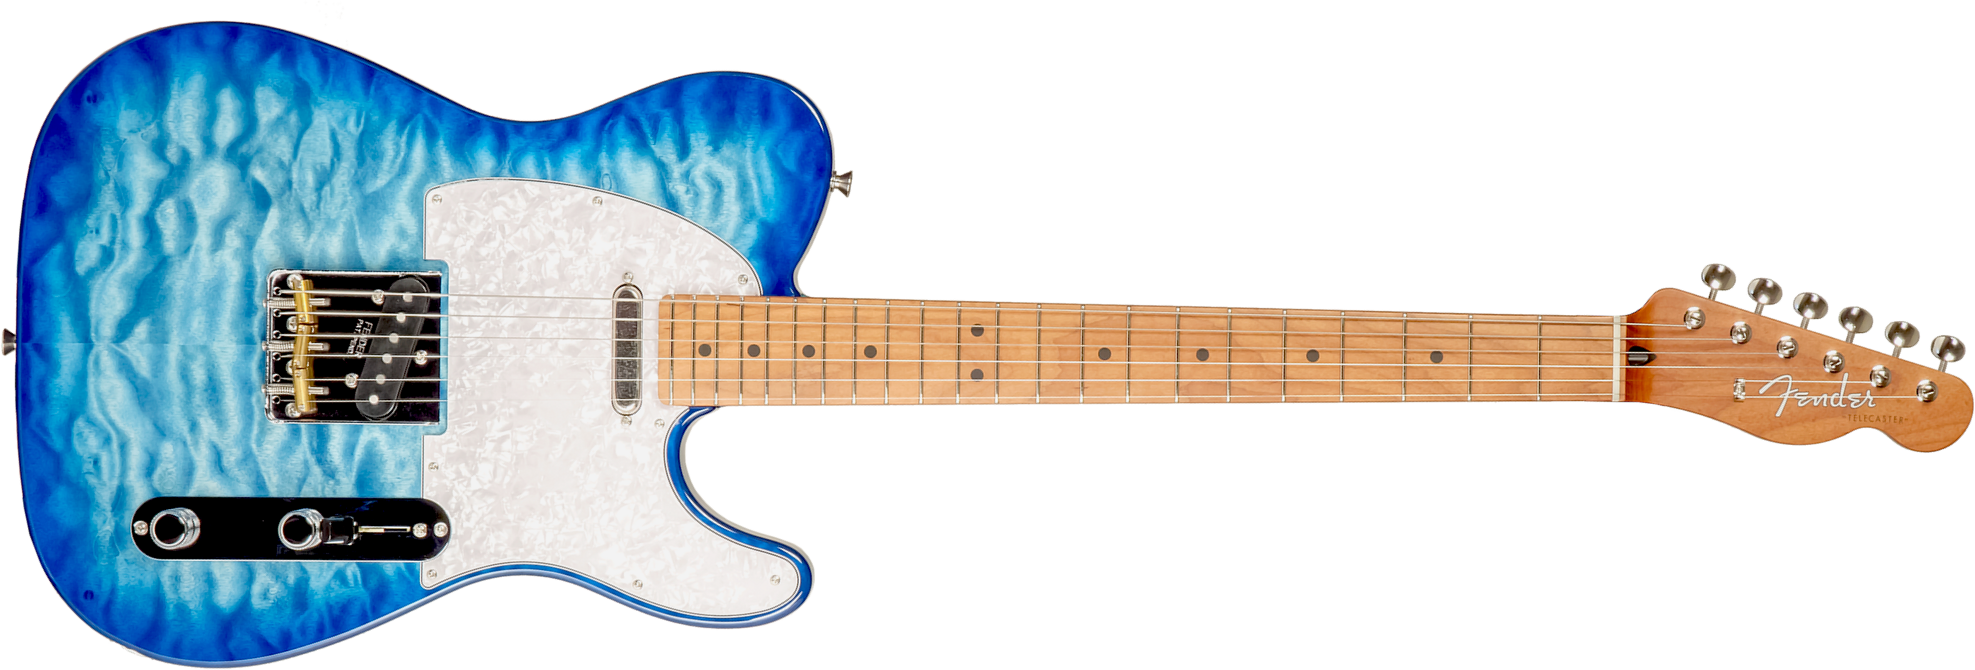 Fender Tele Hybrid Ii Jap 2s Ht Mn - Aqua Blue - E-Gitarre in Teleform - Main picture